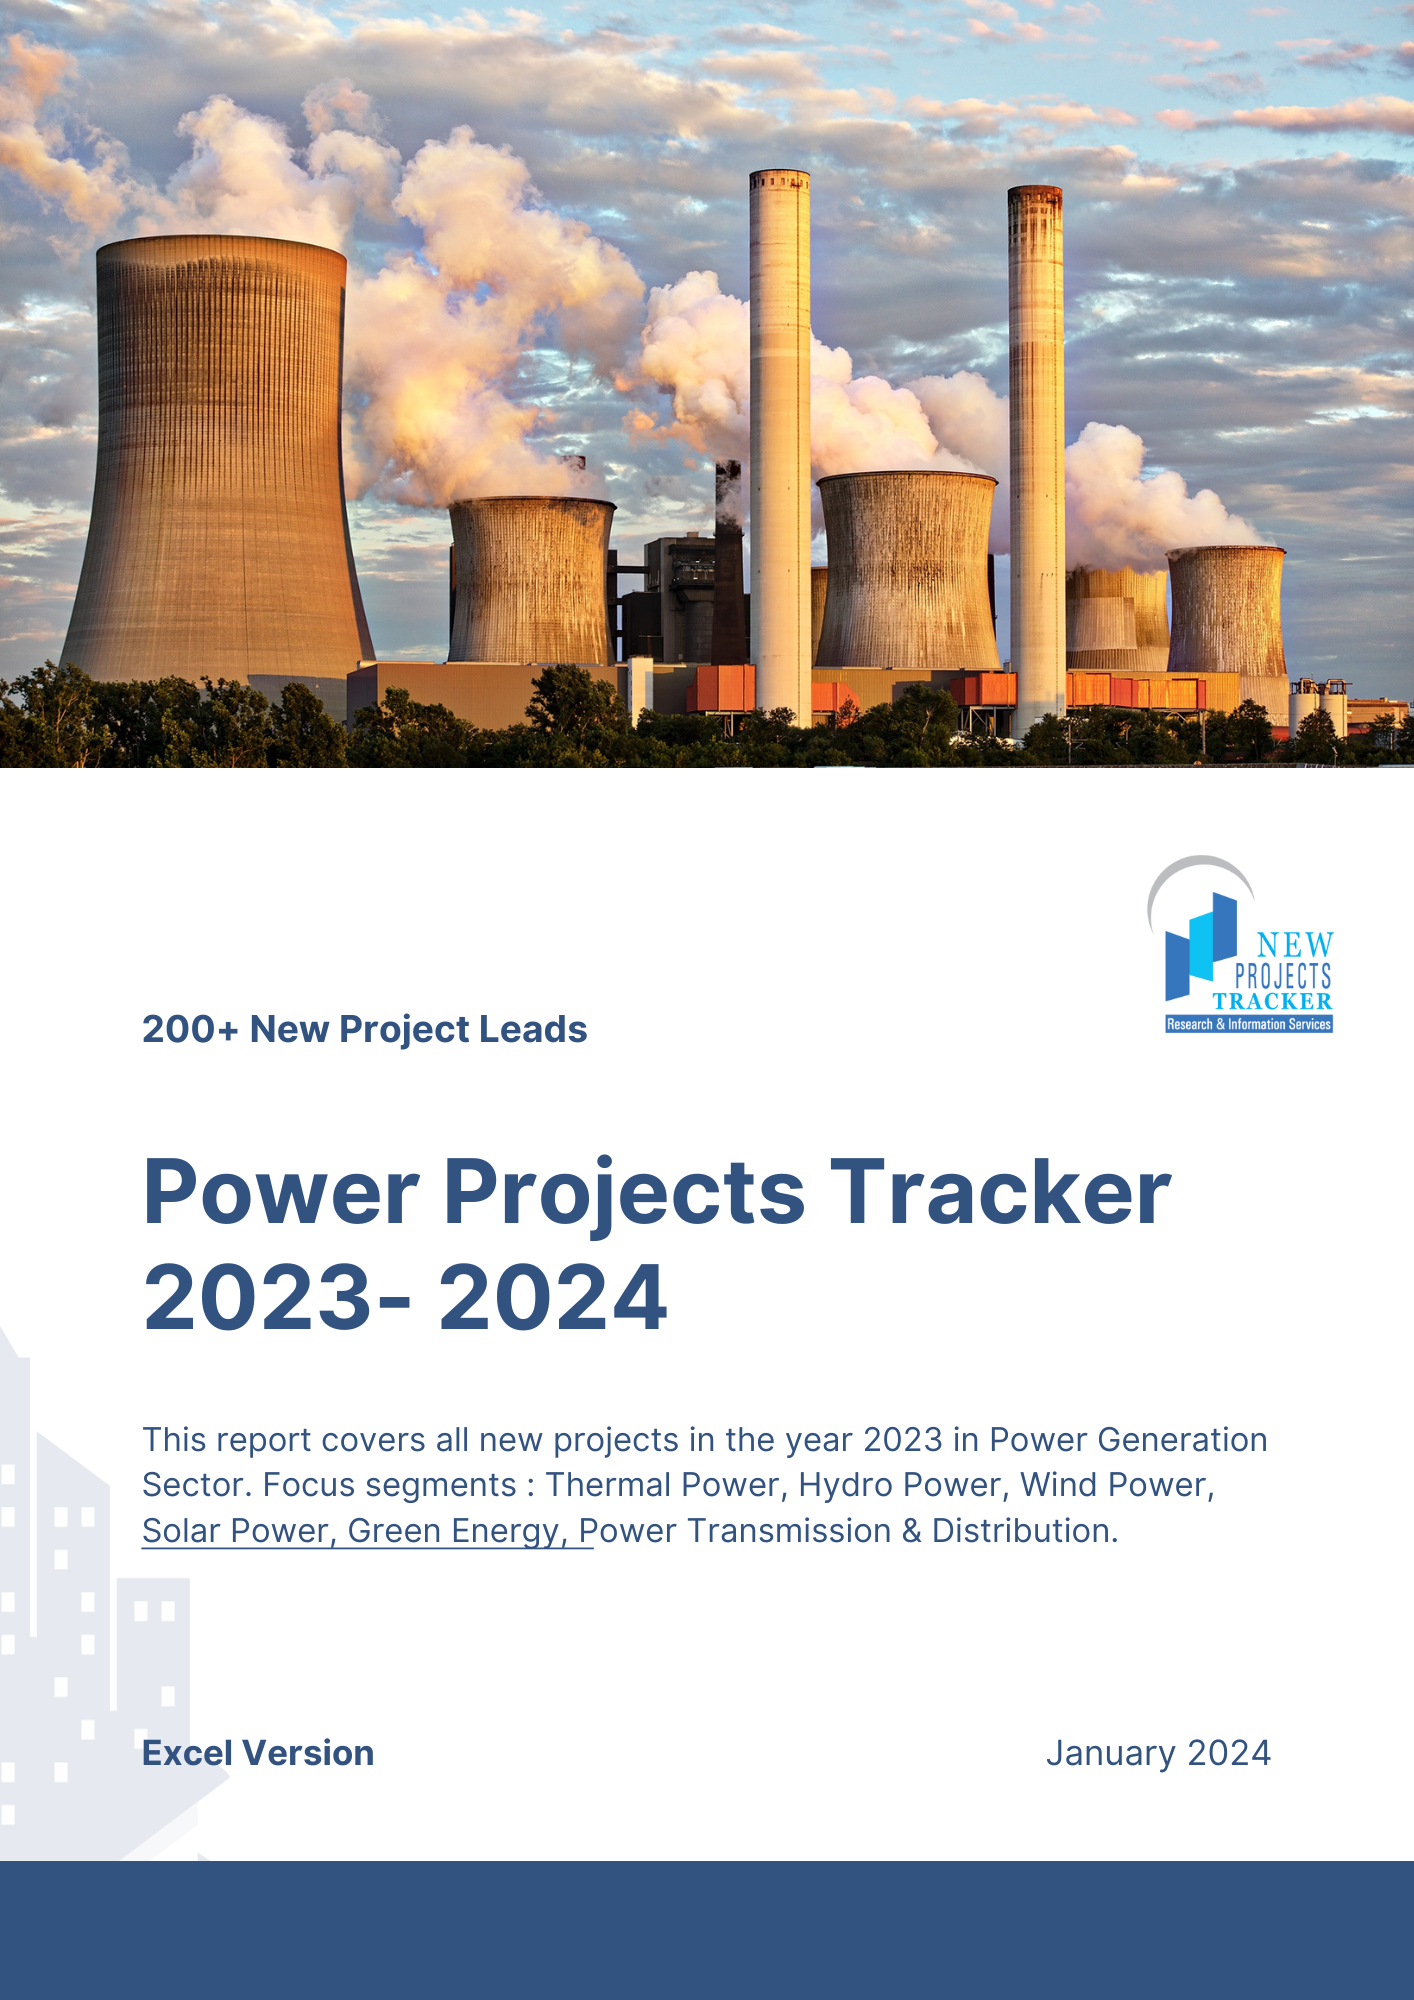 Power Generation Projects Tracker – 2023-2024